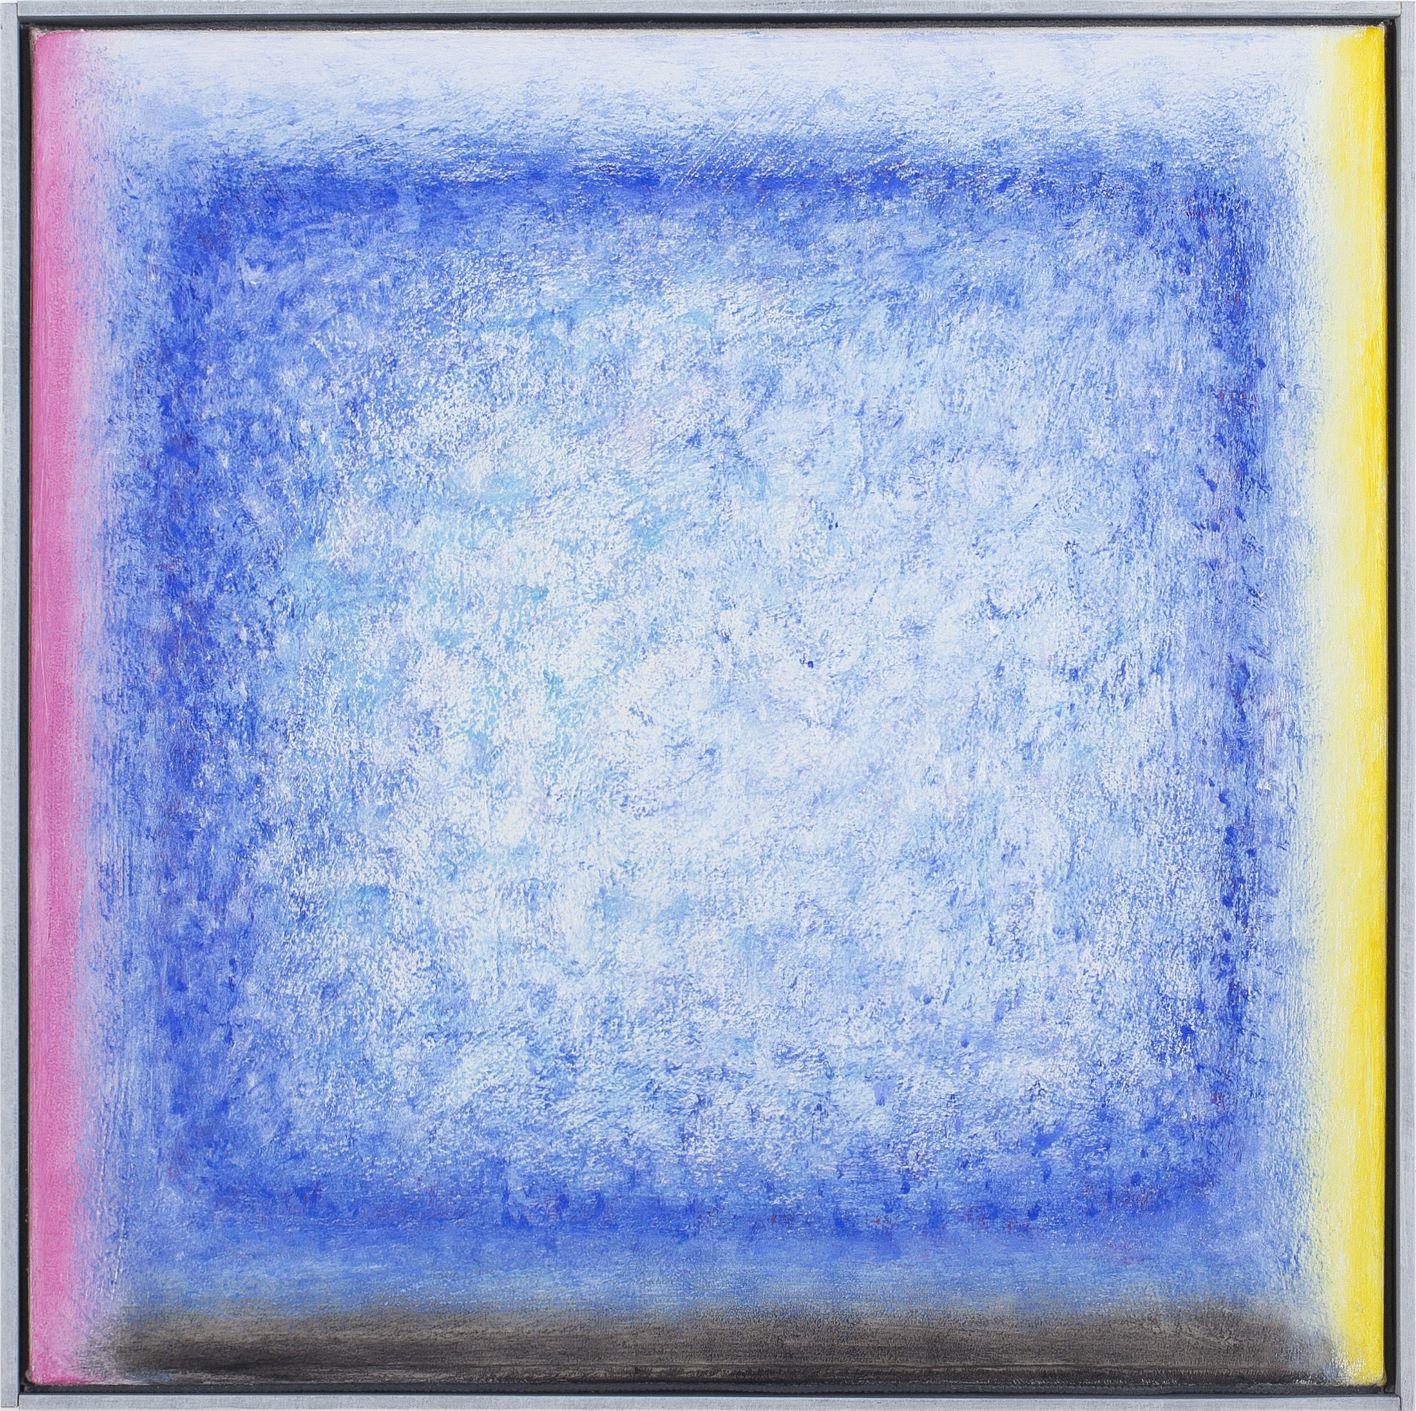 Raffaele Cioffi Abstract Painting - "Soglia Blue" contemporary Italian abstract painting oil on canvas blue